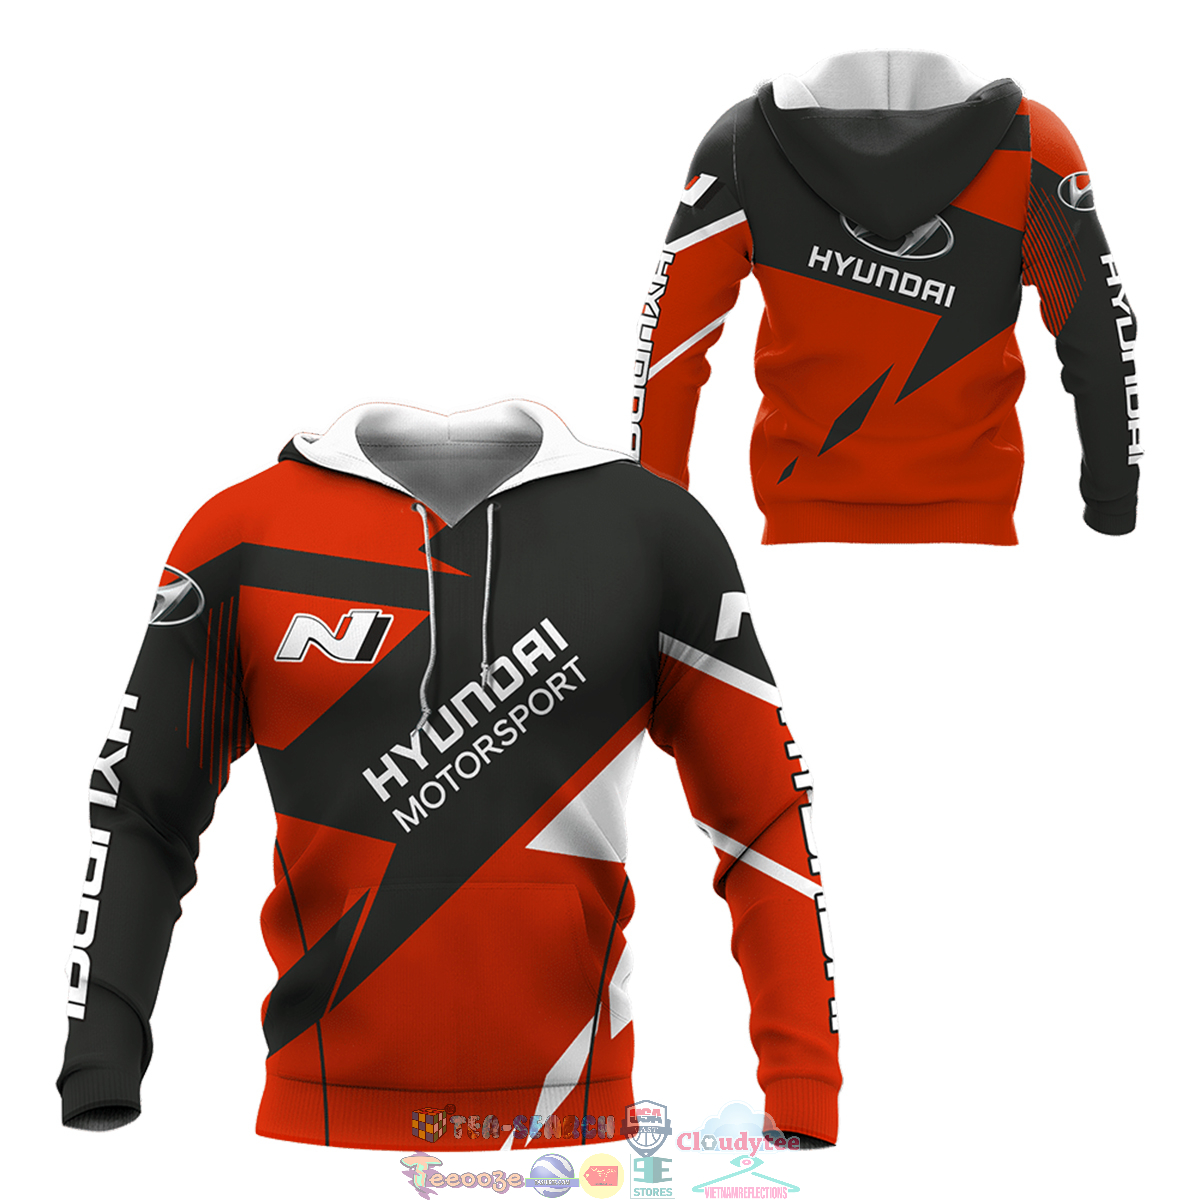 tymIbiQz-TH100822-27xxxHyundai-Motorsport-ver-1-3D-hoodie-and-t-shirt3.jpg